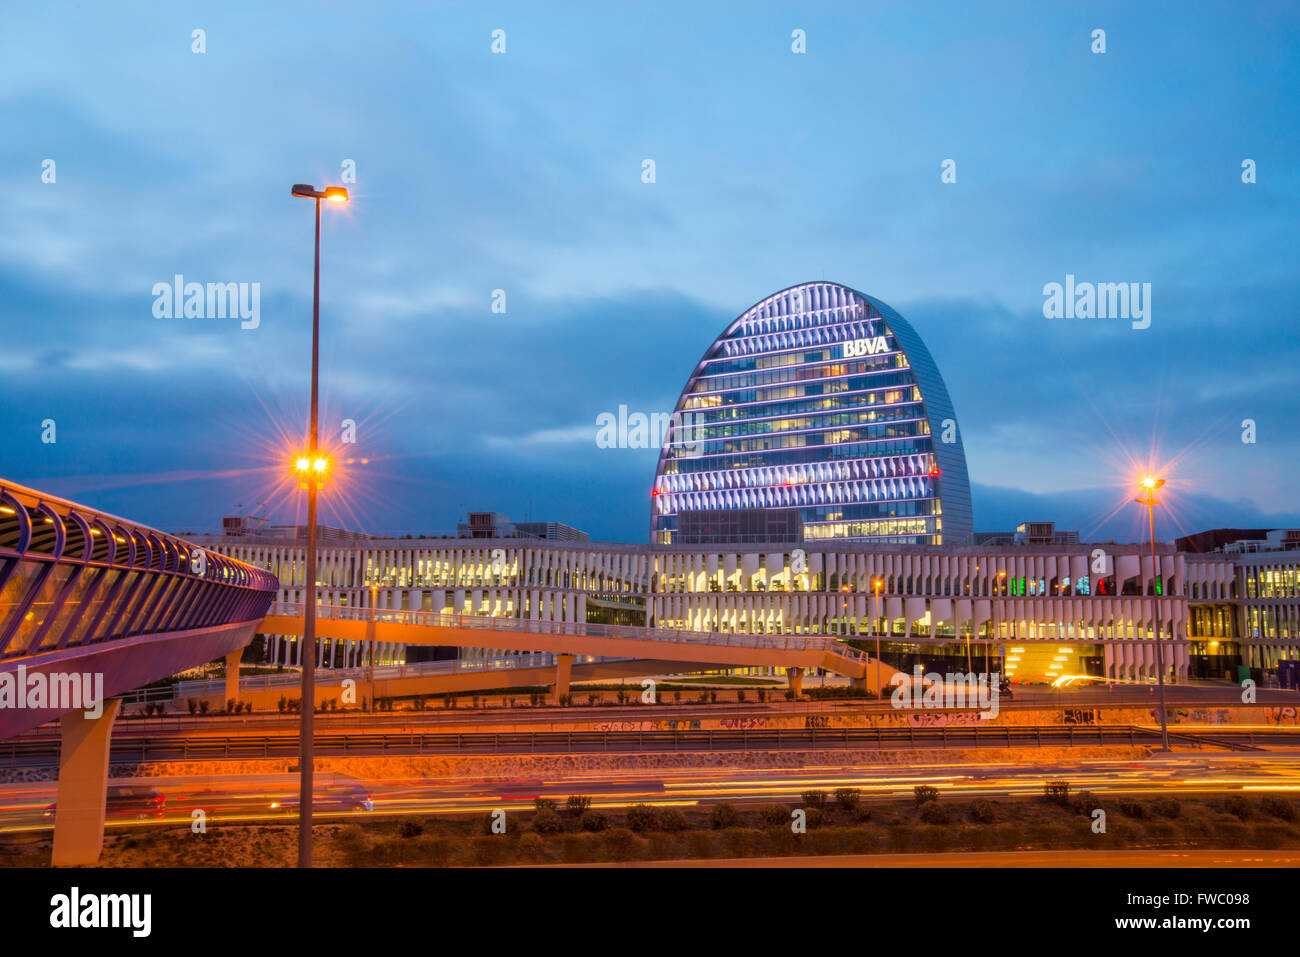 La Vela building and A-1 motorway, night view. Sanchinarro, Madrid, Spain. Stock Photo